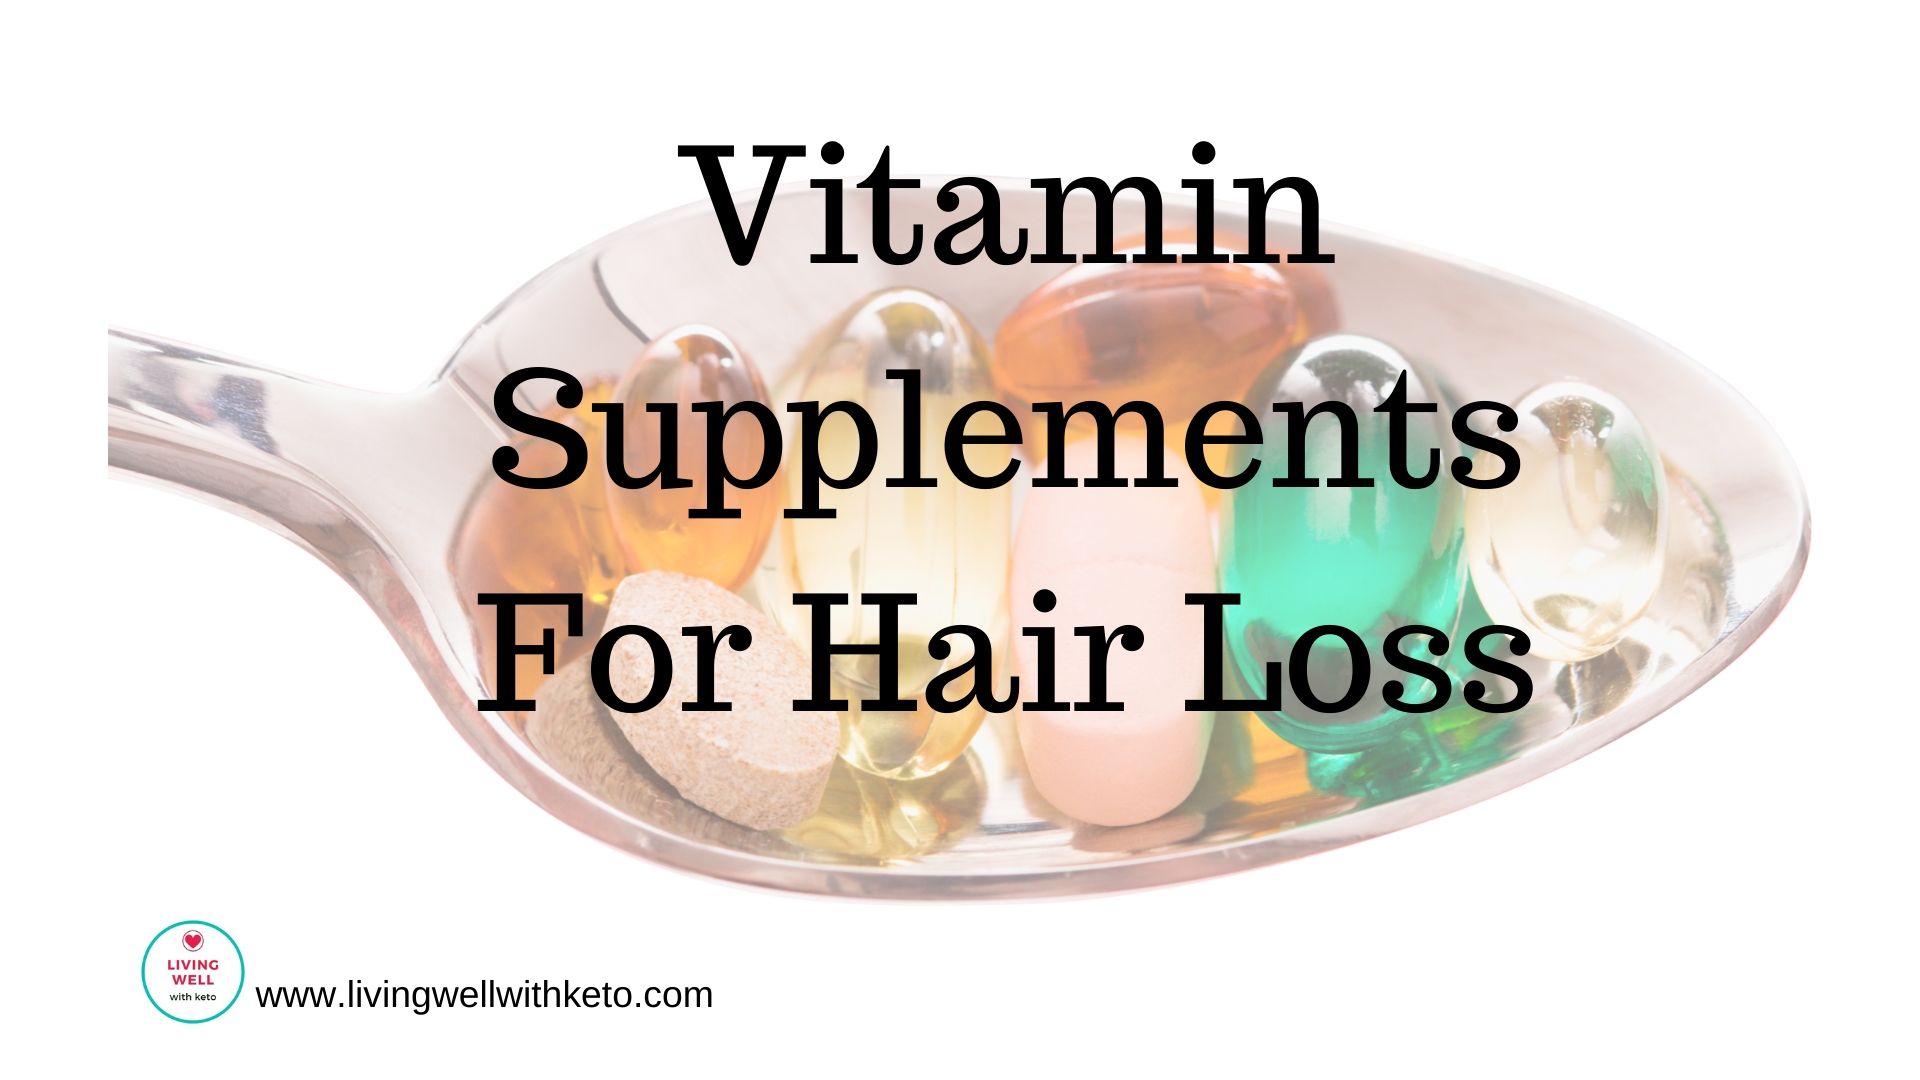 Vitamin supplements for hair loss